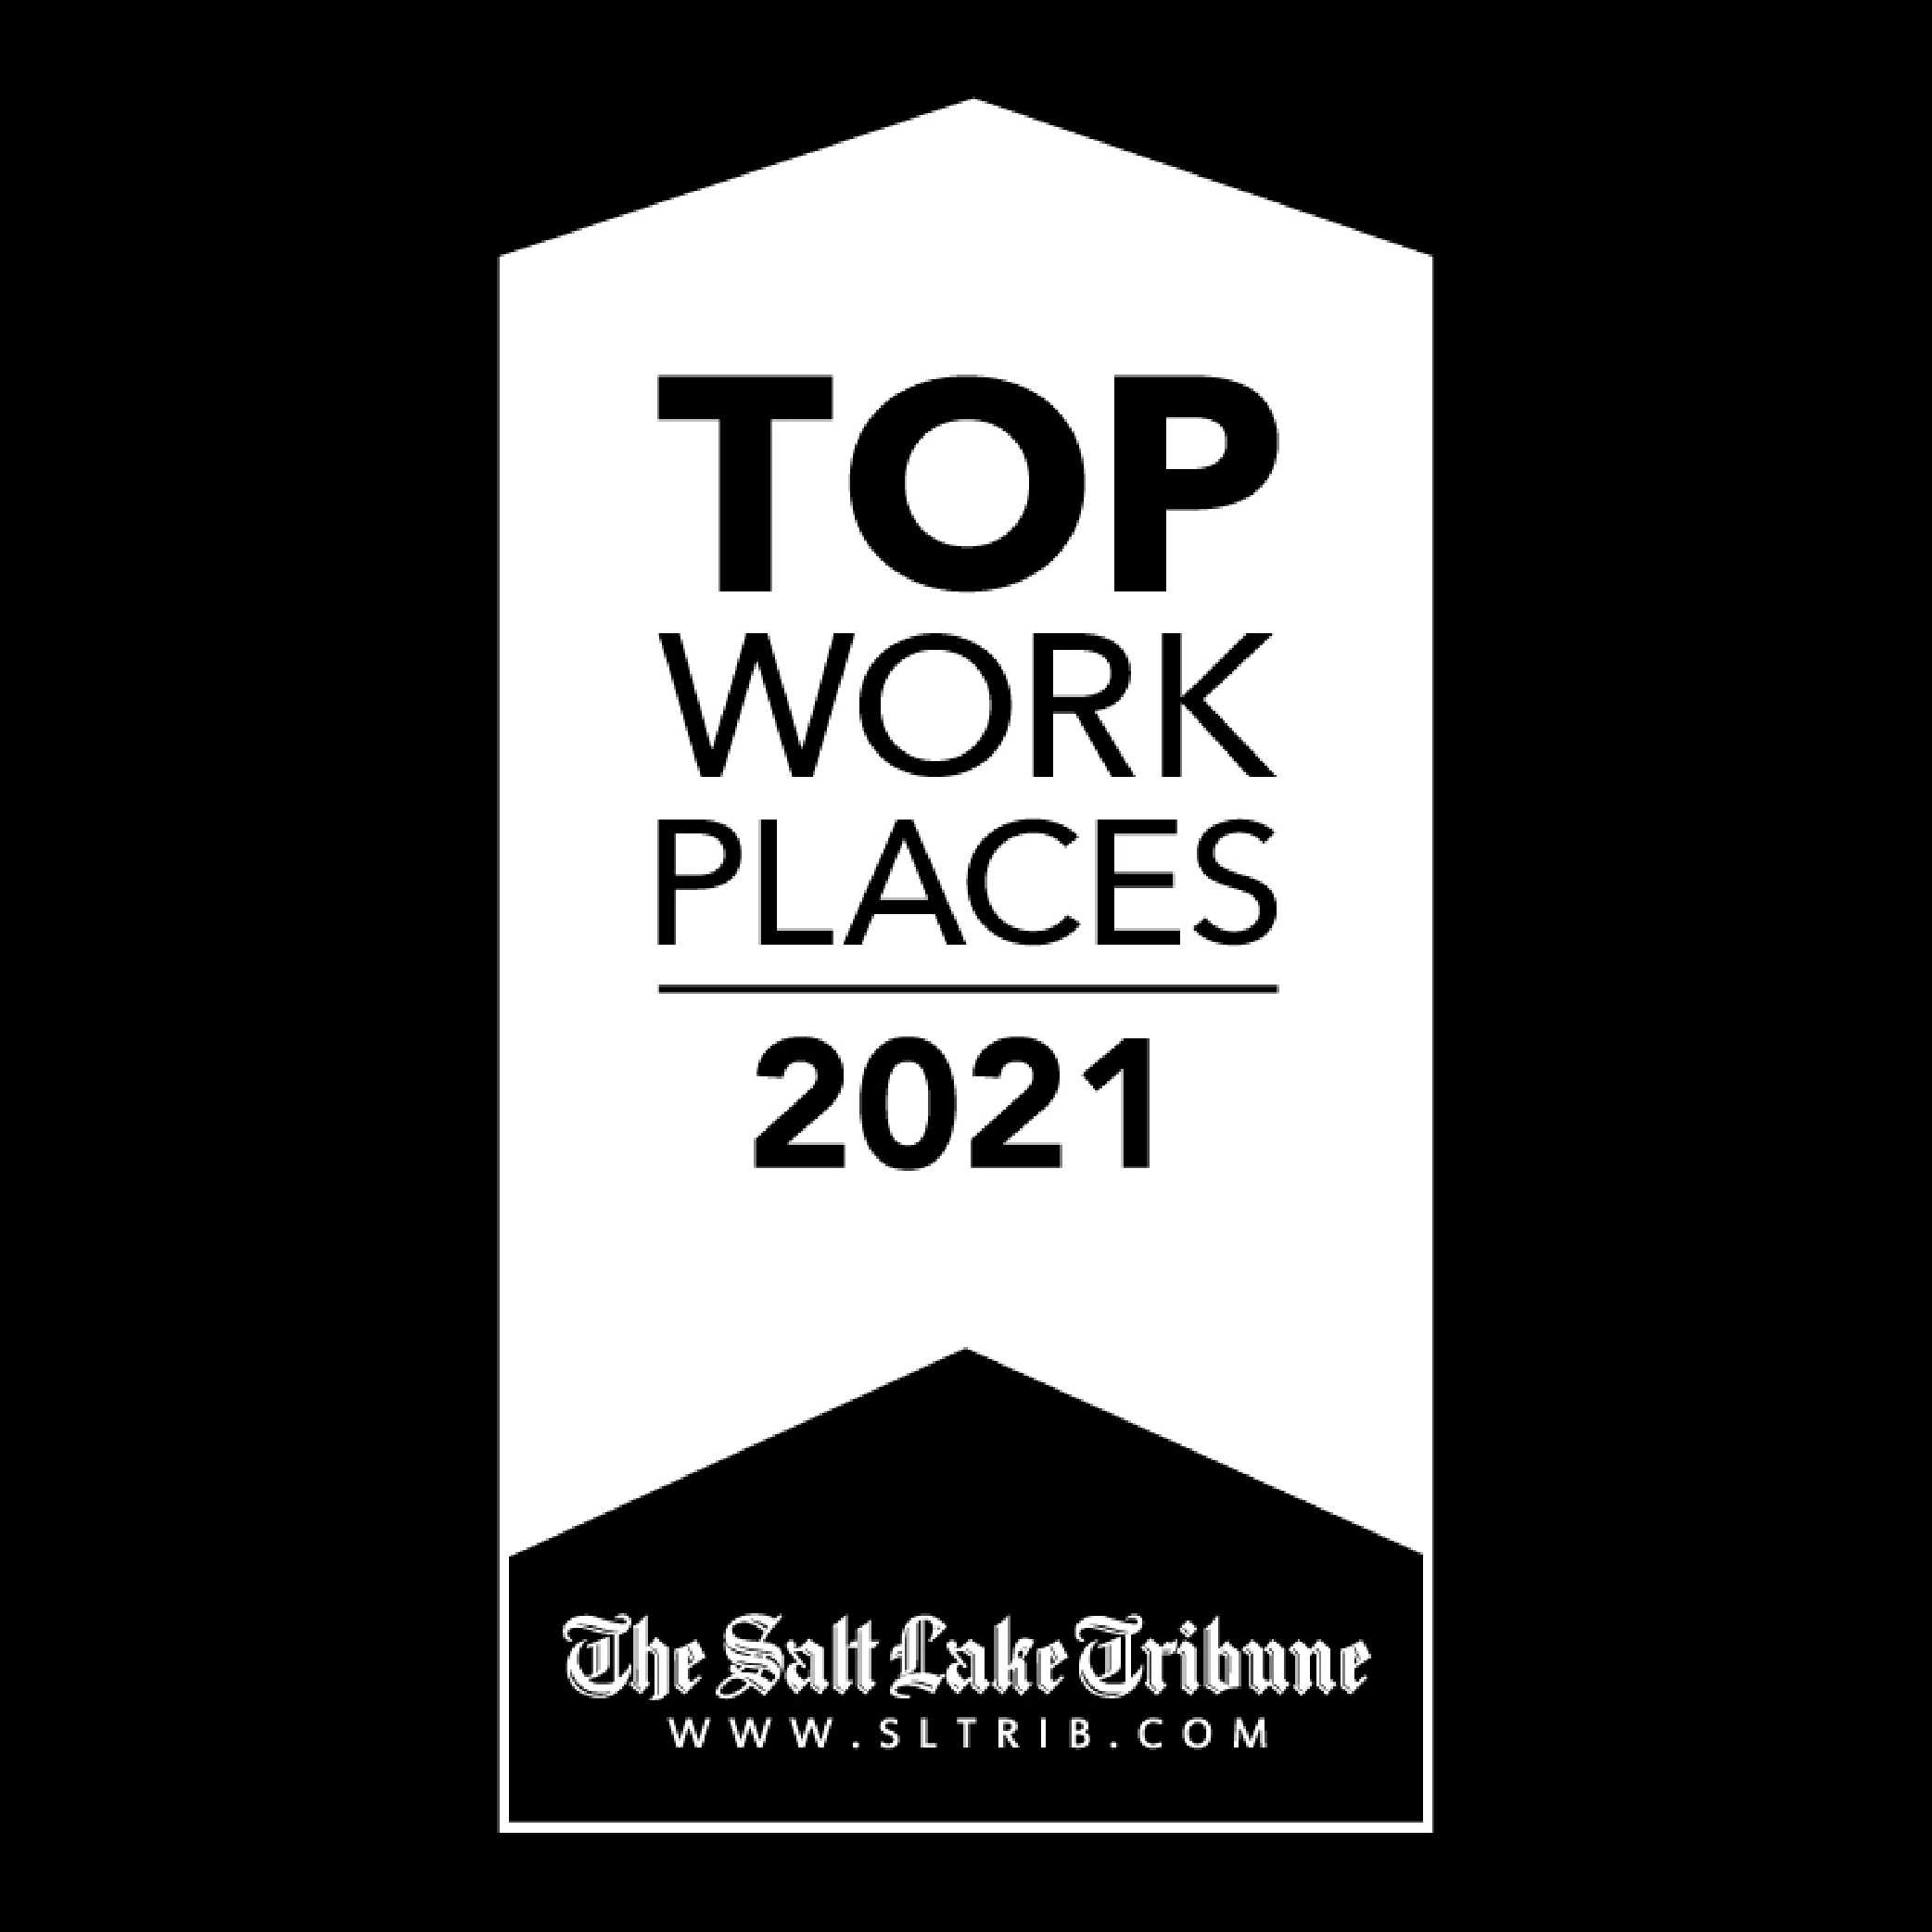 GoEngineer Voted Top Work Places 2021